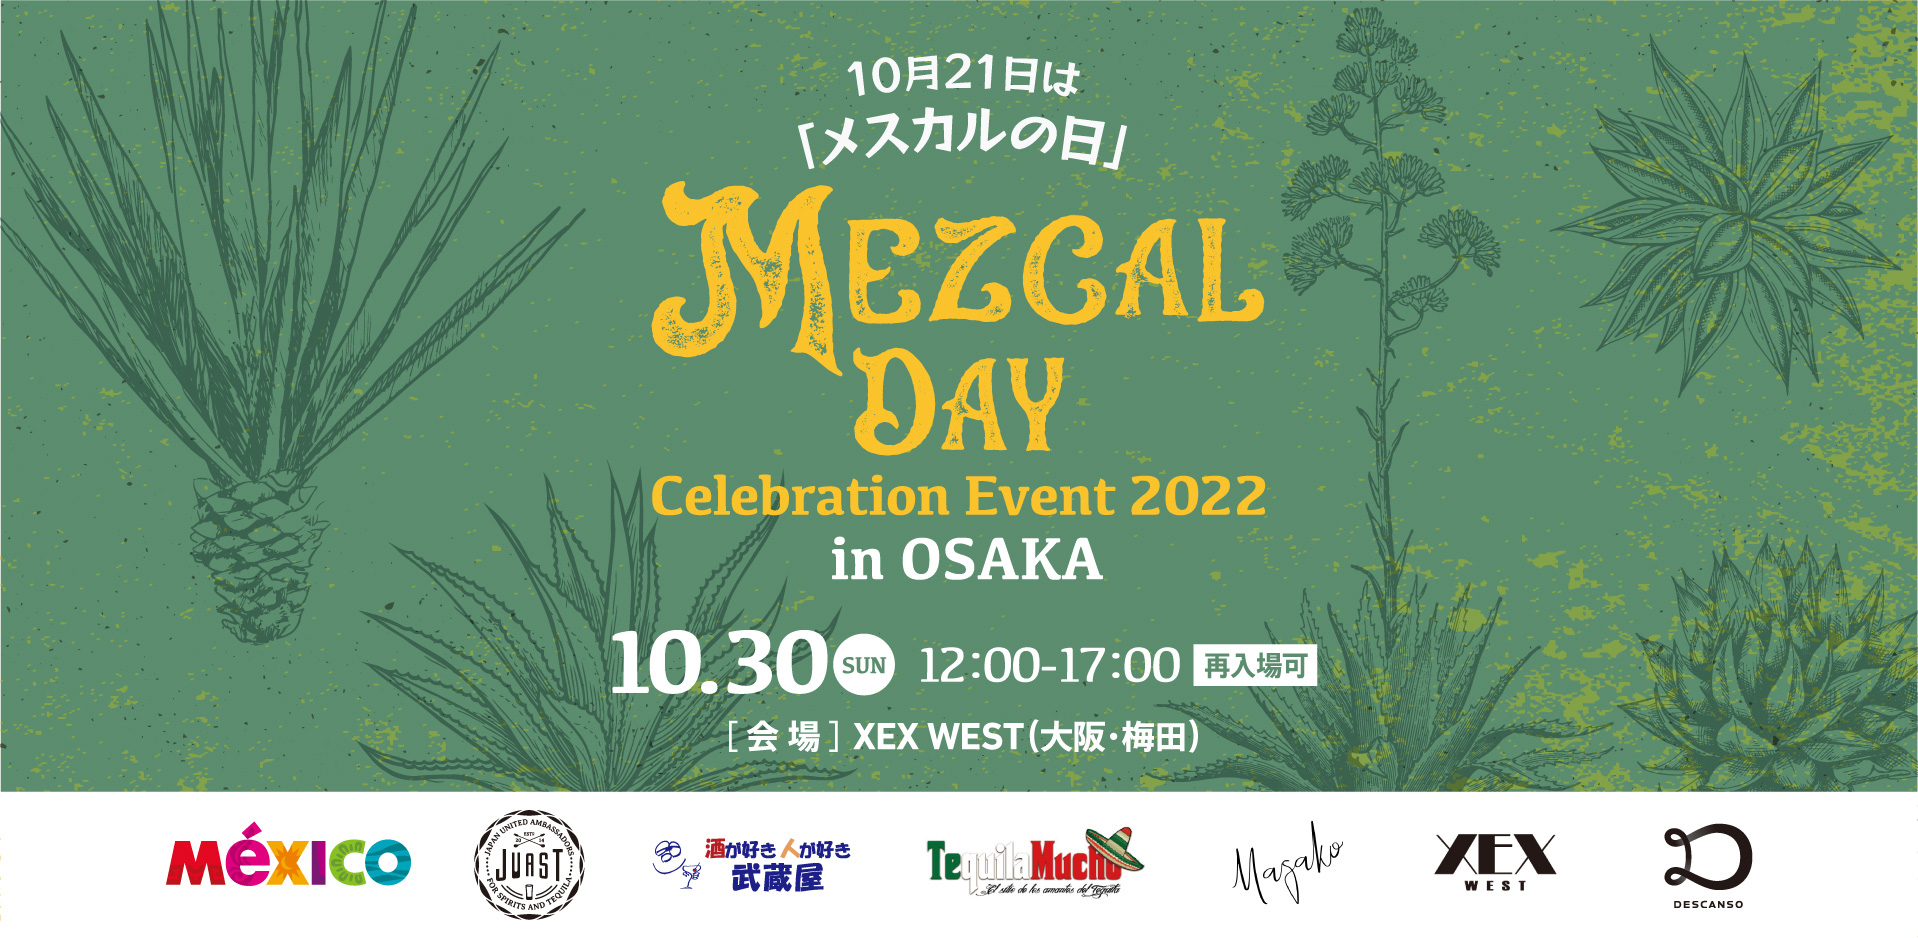 Mezcal Day Celebration Event 2022 in Osaka